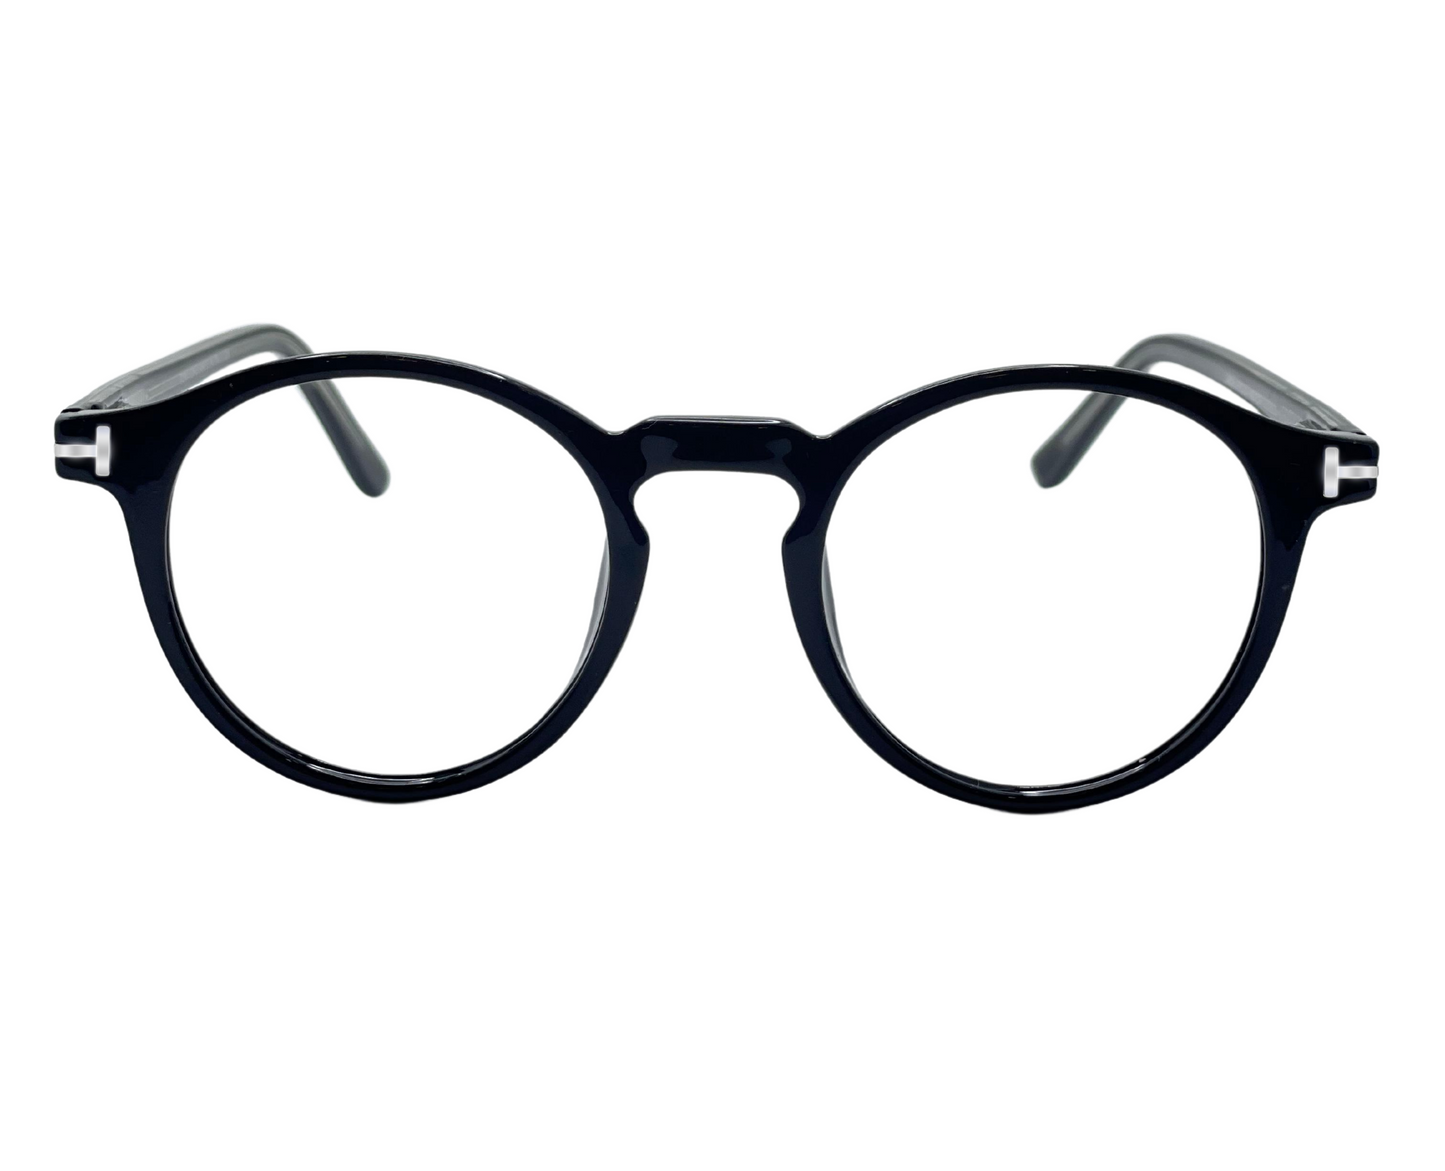 NS Deluxe - 8608 - Black - Eyeglasses